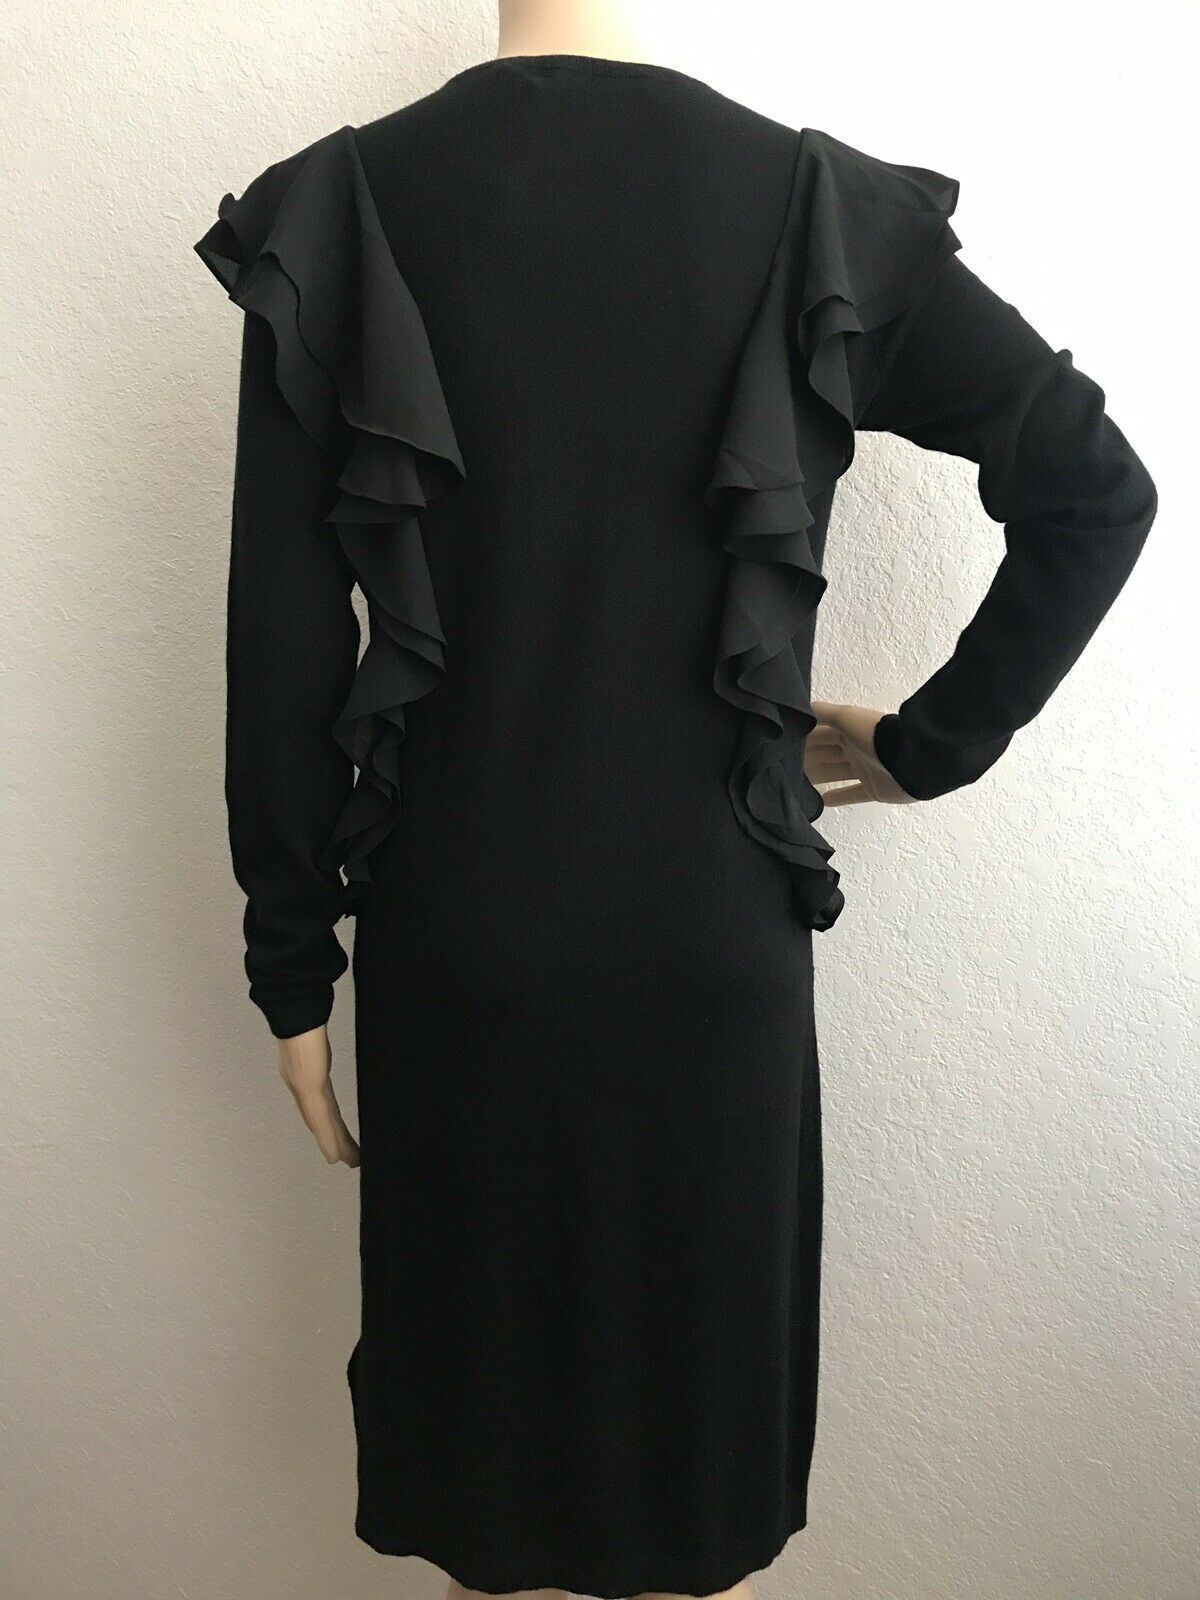 NWT Polo Ralph Lauren Women's Black  Ruffled Cotton Sweater Dress Size M